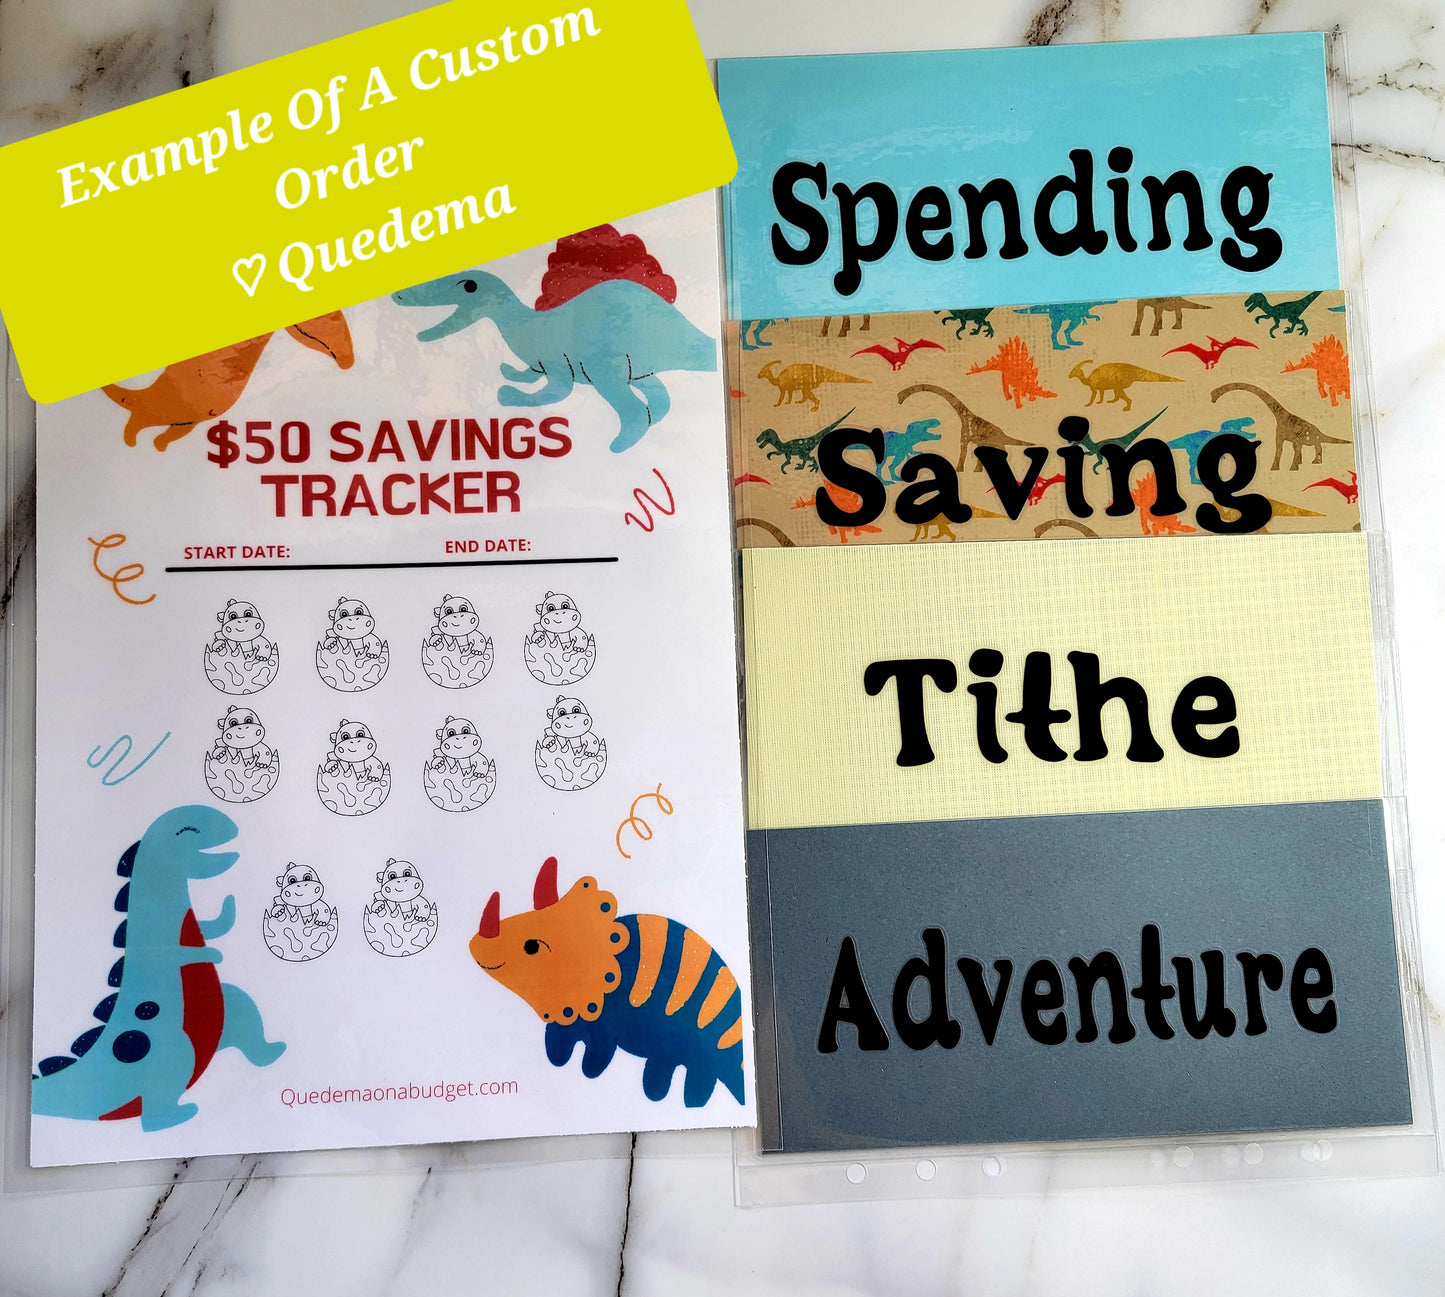 Little Sharks $100 Savings Kids Starter Kit! 7 Piece Bundle!